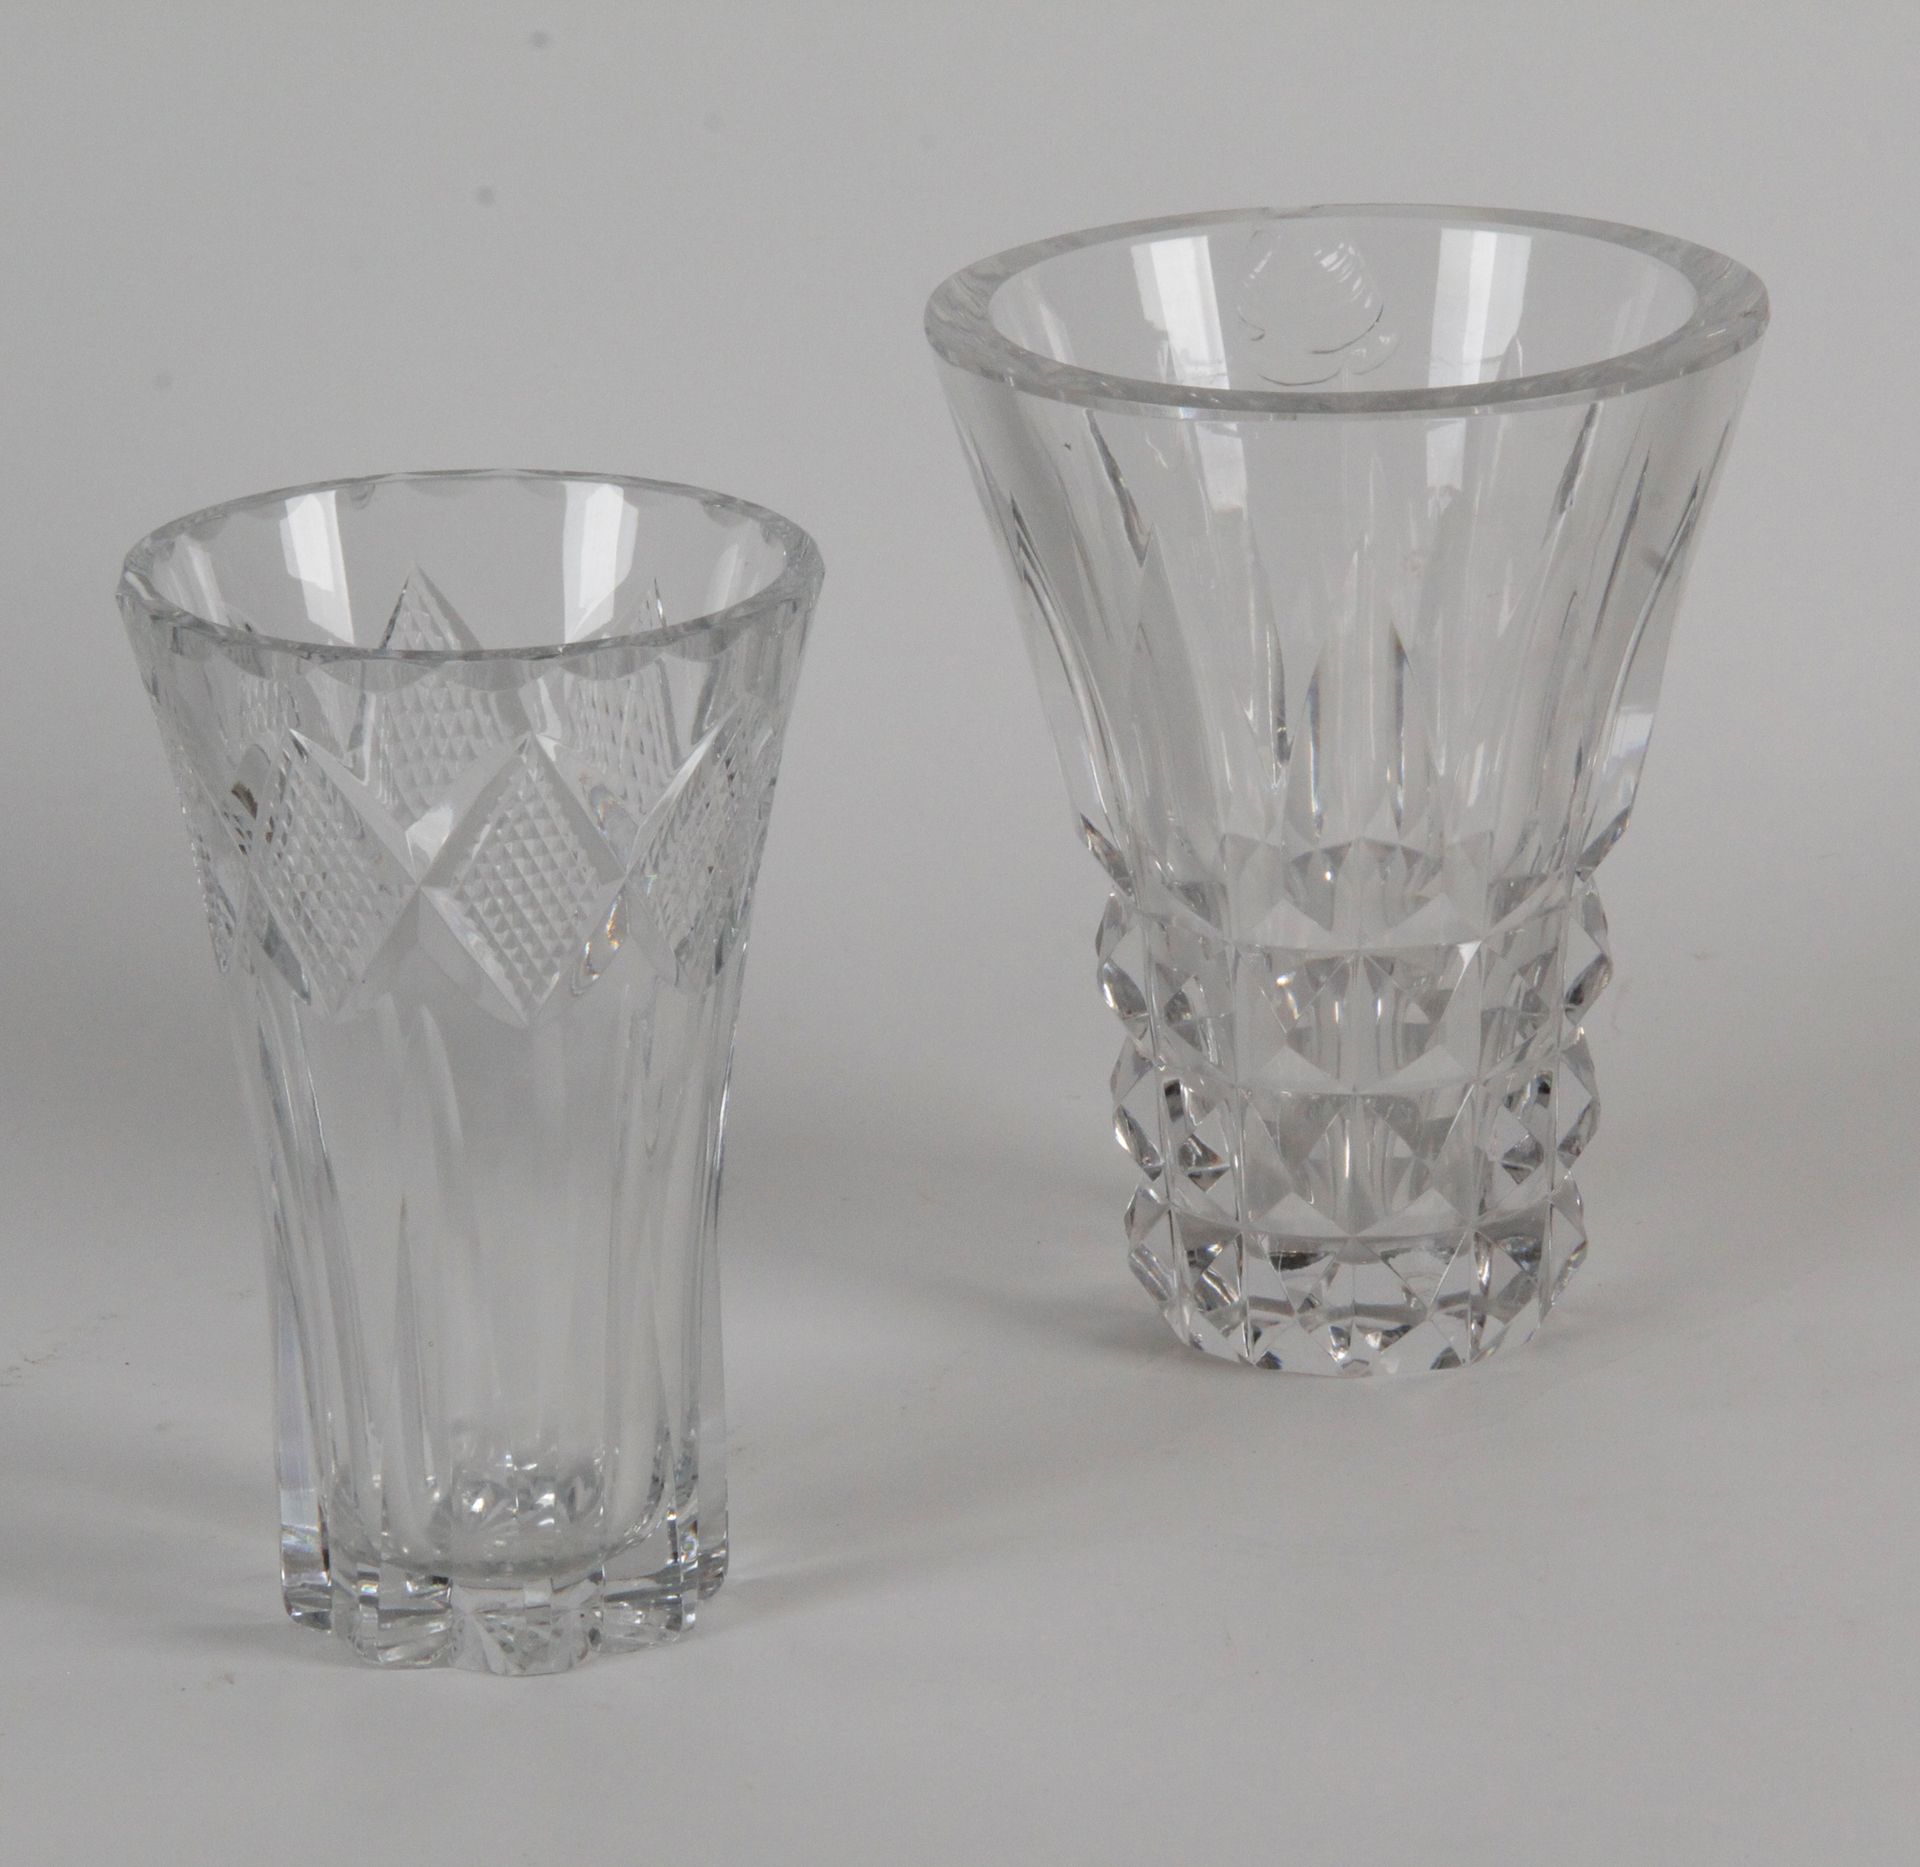 Null 圣路易：一个钻石切割的水晶花瓶。 高：21厘米（重要芯片）。 一个波西米亚水晶花瓶（小碎片）。高20厘米。